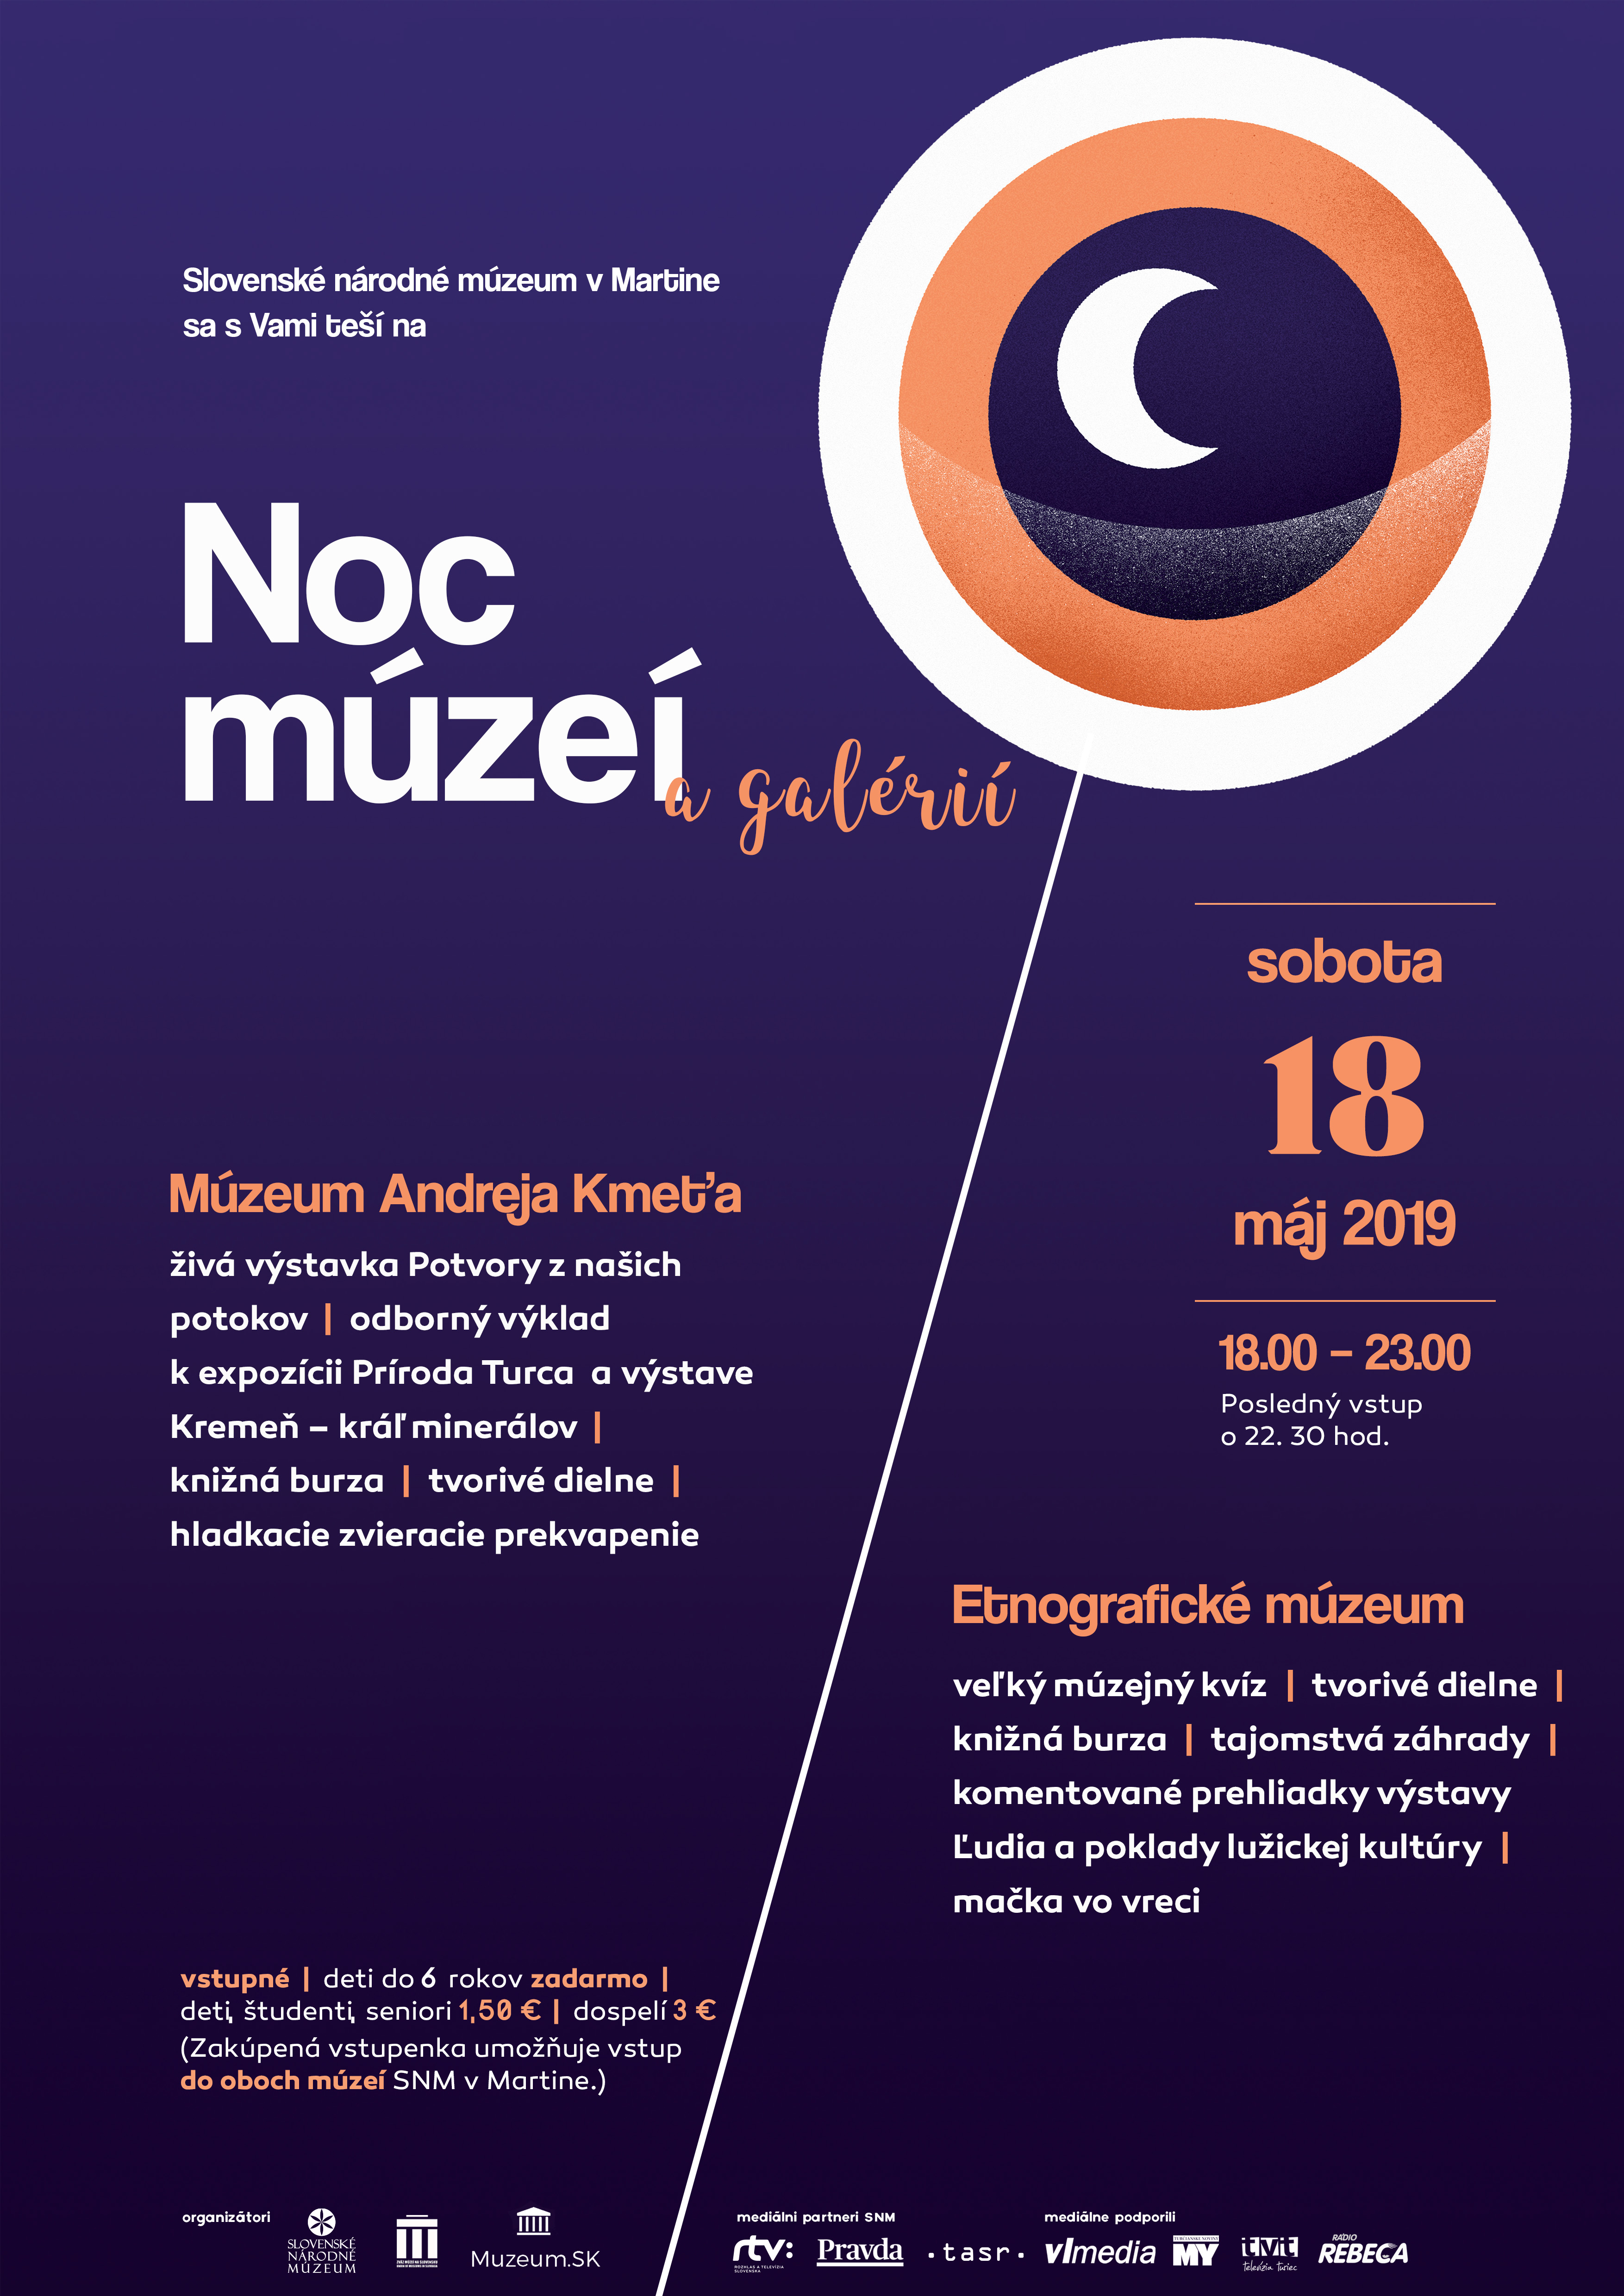 noc muzei a galerii sloveske narodne muzeum v martine etnograficke andreja kmeta